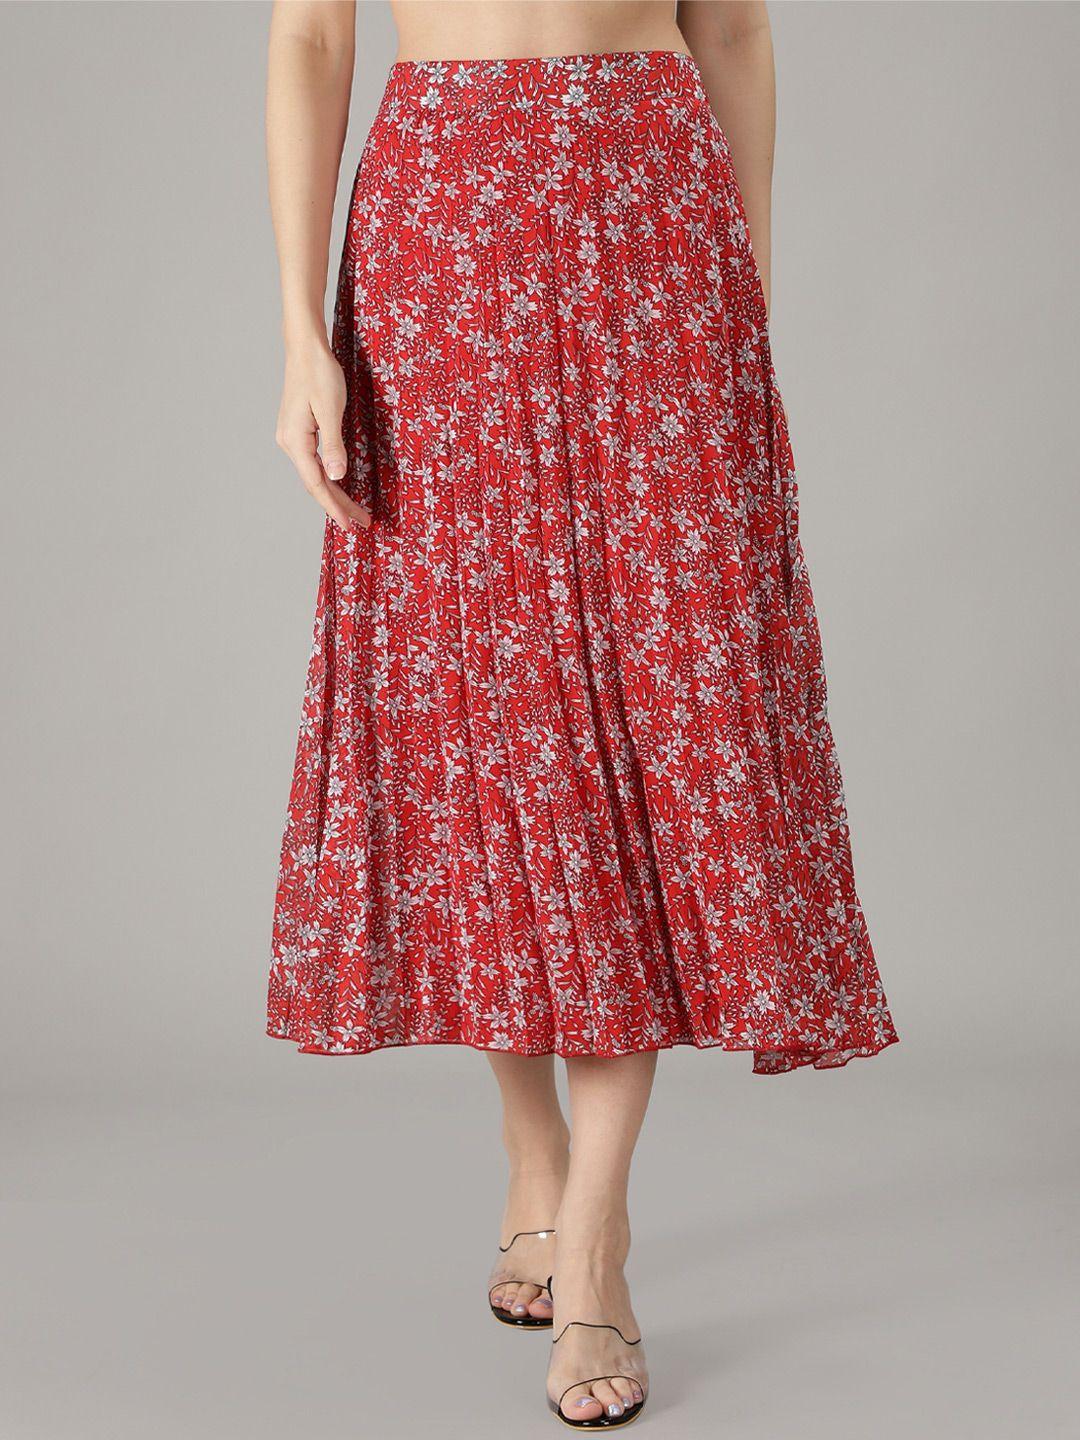 nuevosdamas-women-red-&-white-floral-printed-a-line-knee-length-skirts